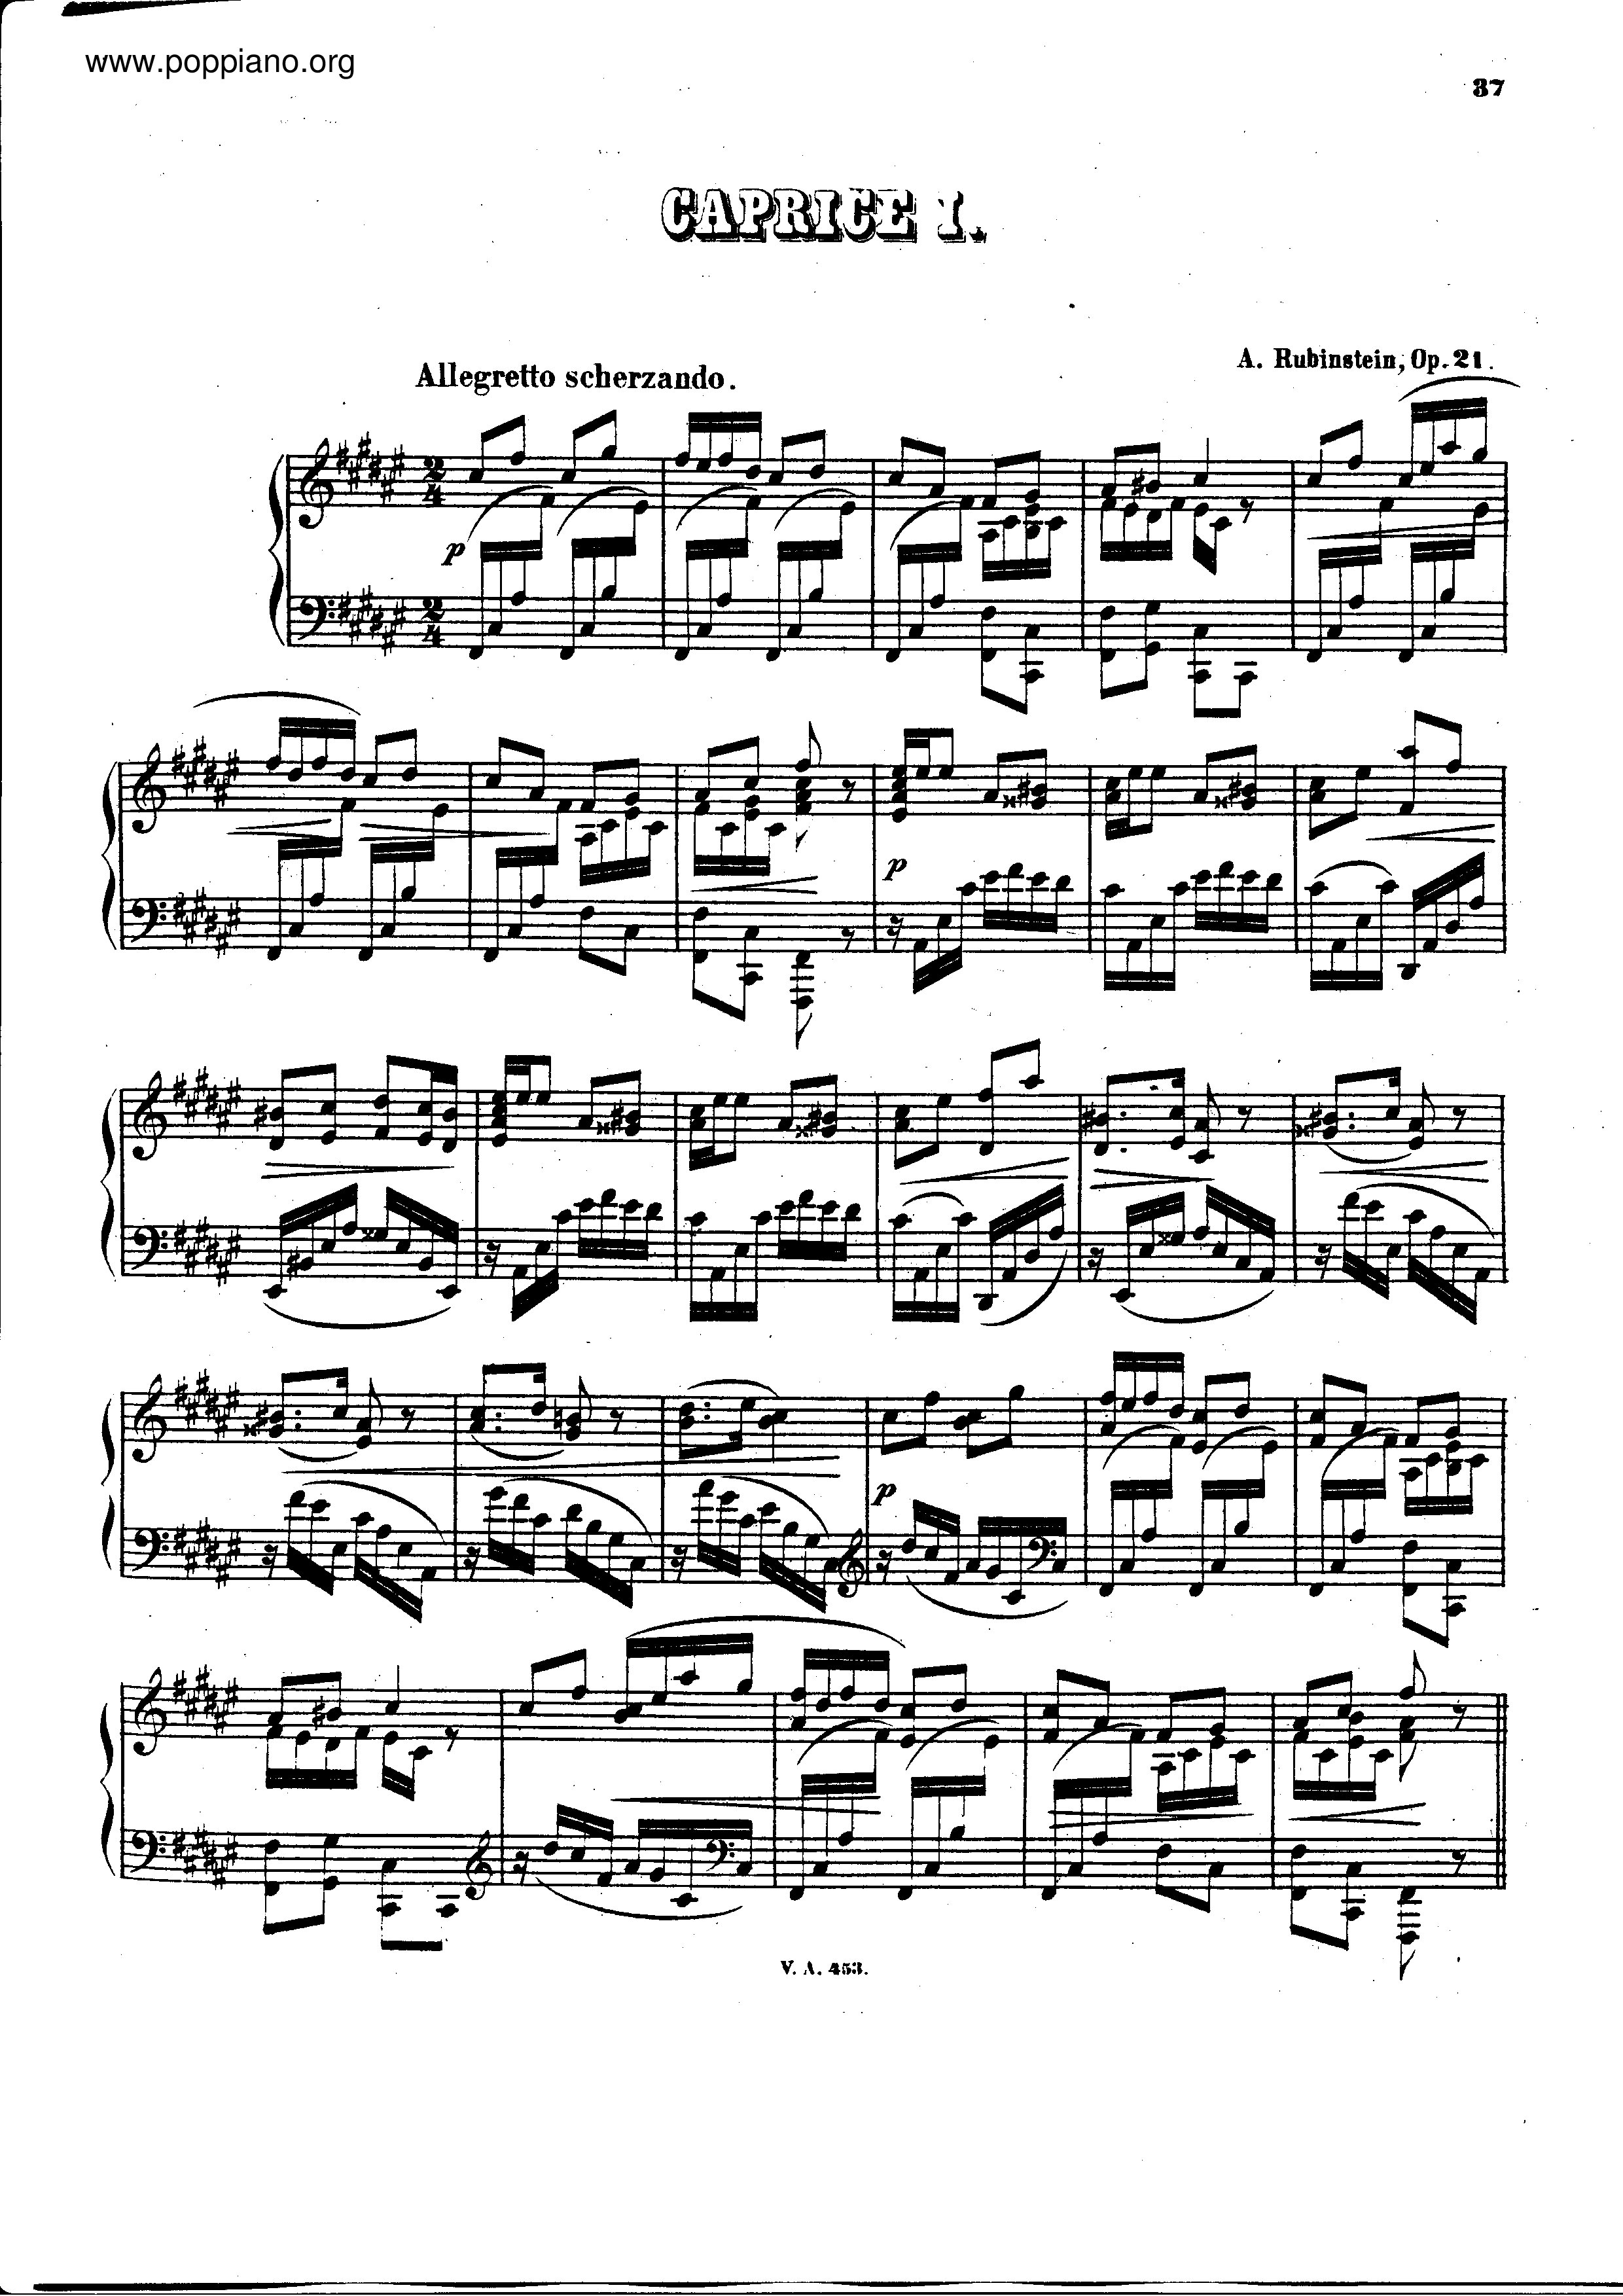 3 Caprices, Op.21 Score